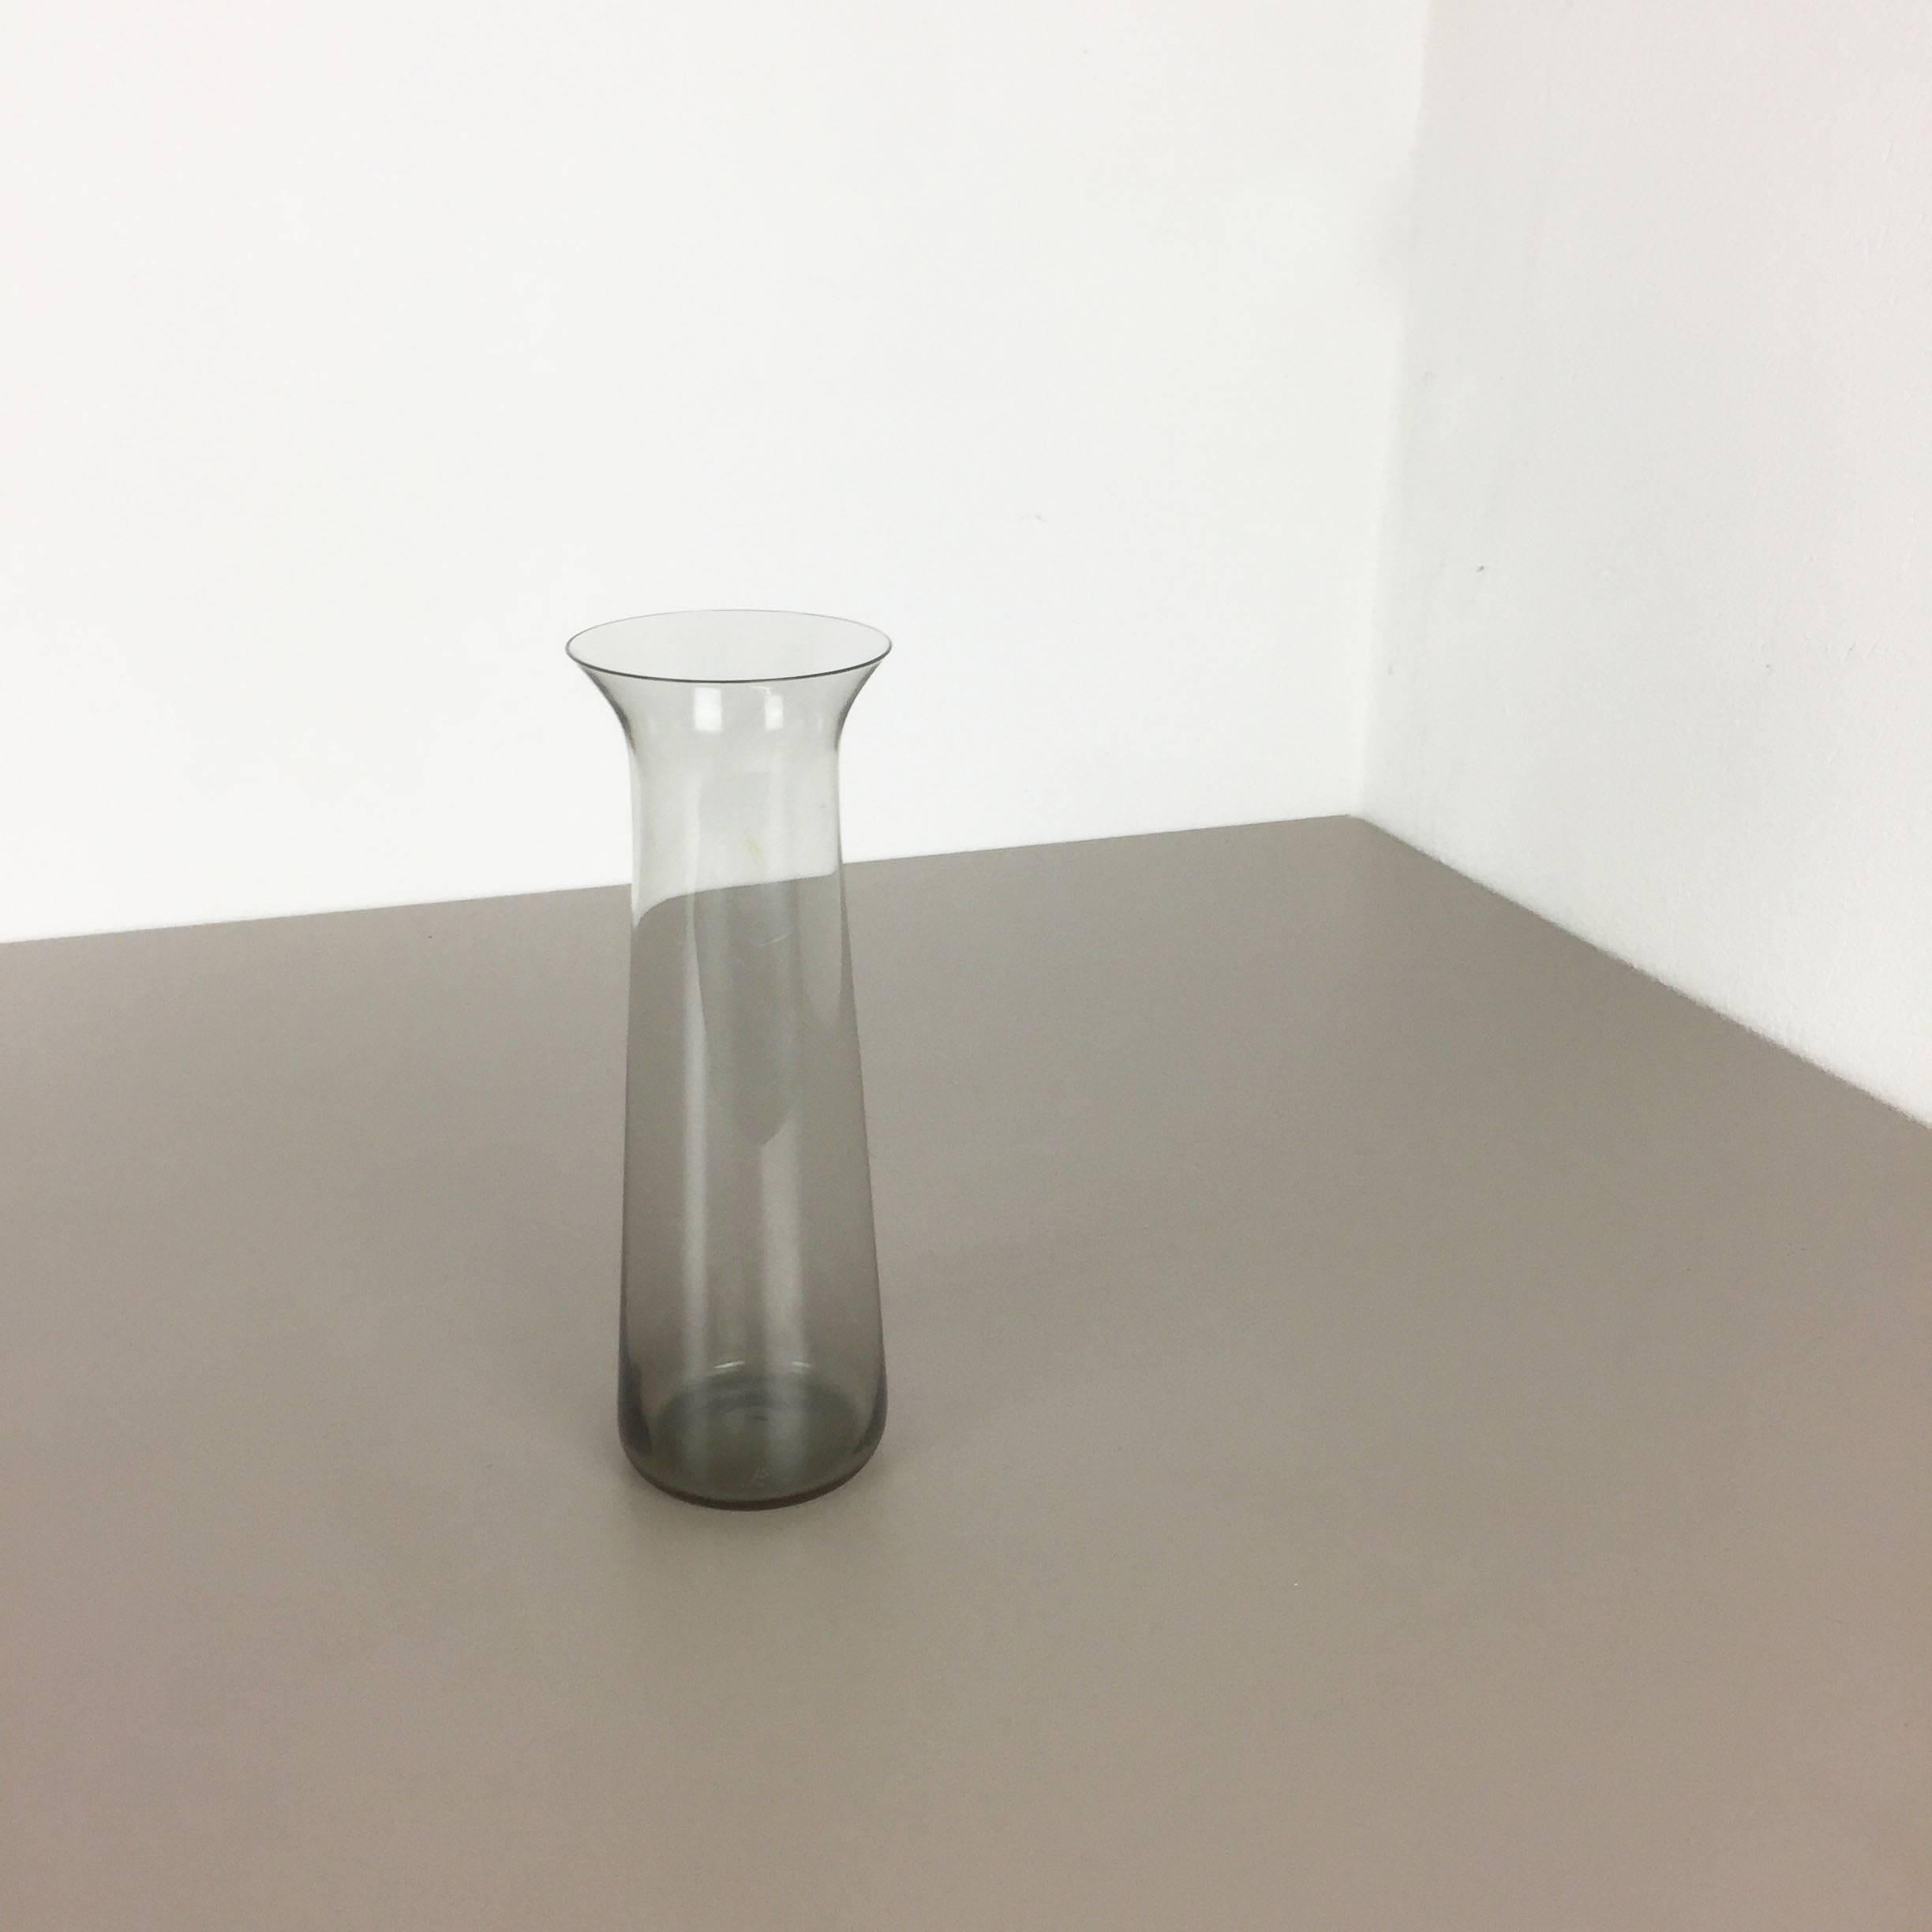 Article:

Glass vase


Producer:

WMF Württembergische Metallwaren Fabrik in Geislingen 


Designer:

Wilhelm Wagenfeld 


Design:

WMF turmalin series


Decade:

1960s


Description:

Original vintage 1960s Vase of the